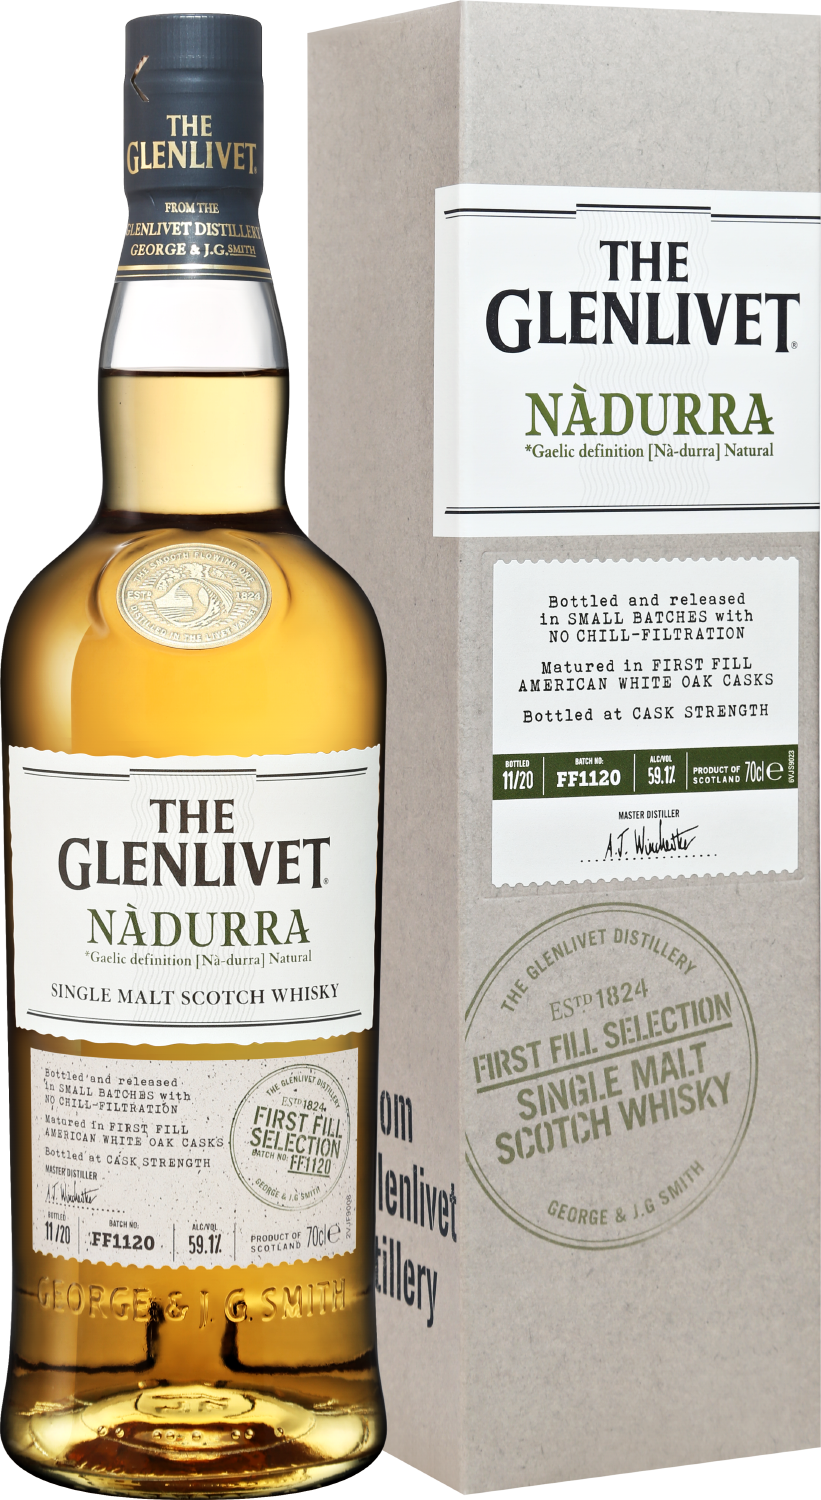 The Glenlivet Nadurra First Fill Selection Single Malt Scotch Whisky (gift box)